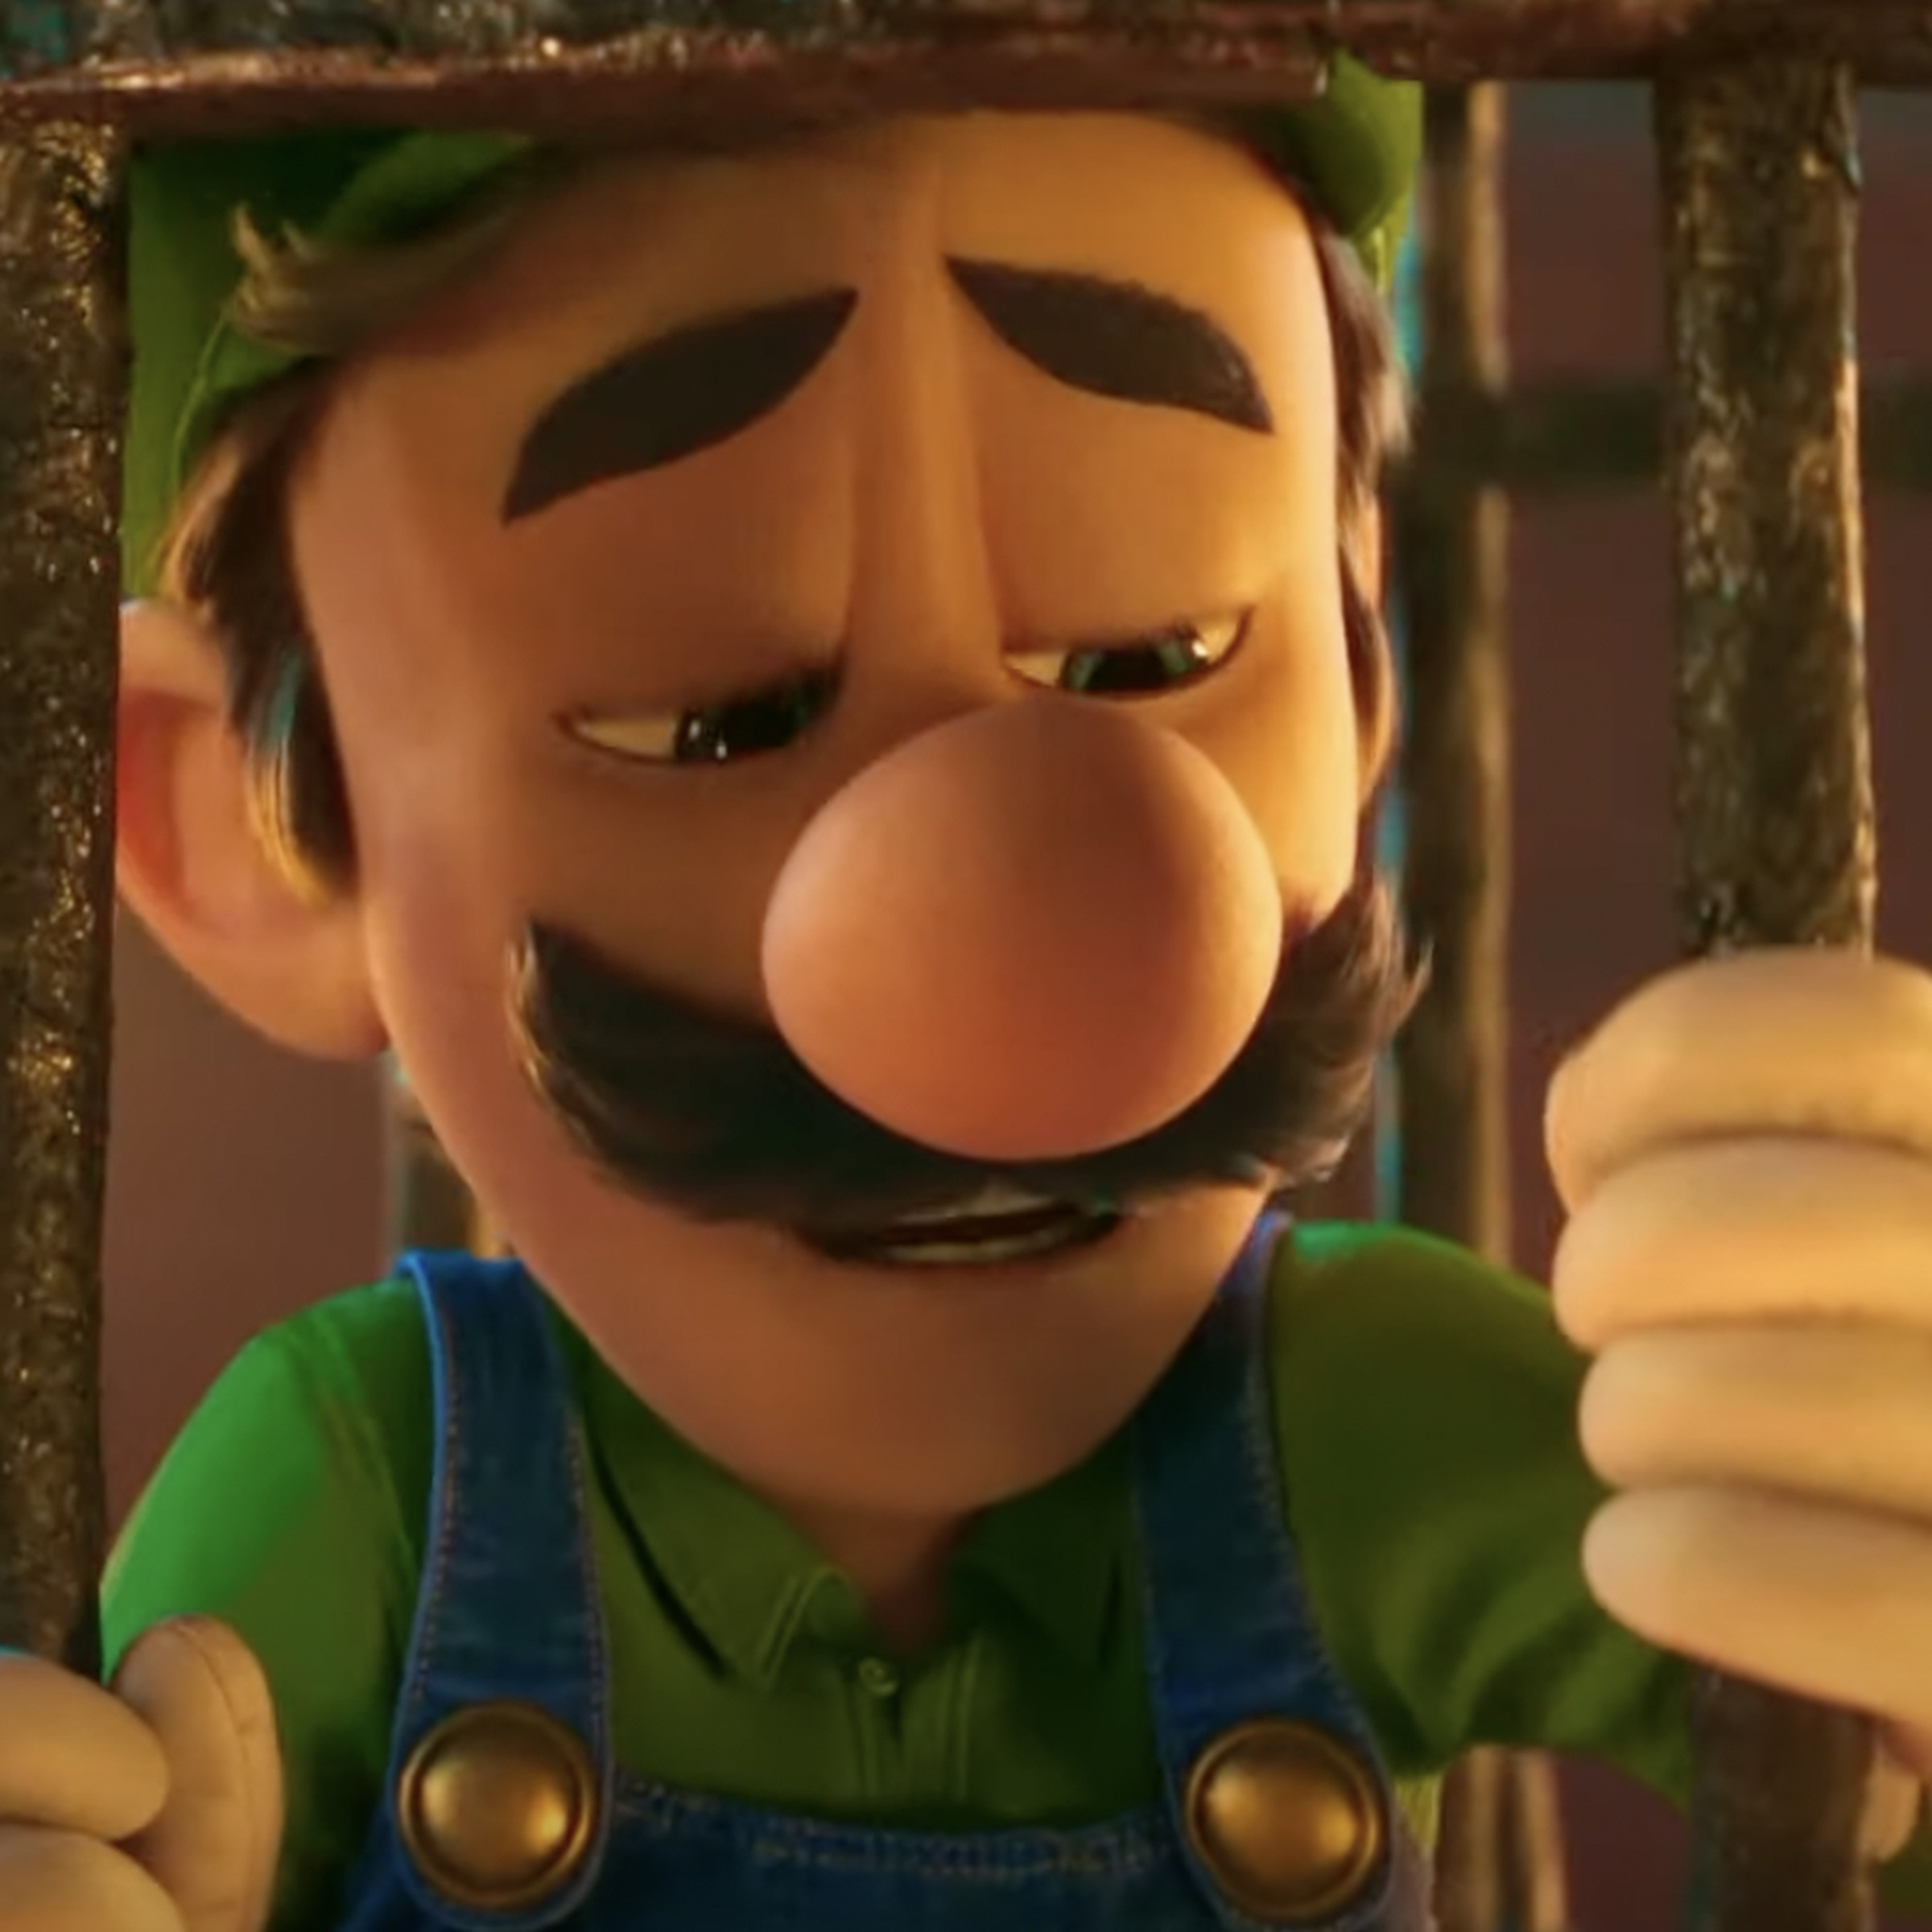 A still image of Luigi in The Super Mario Bros. Movie.